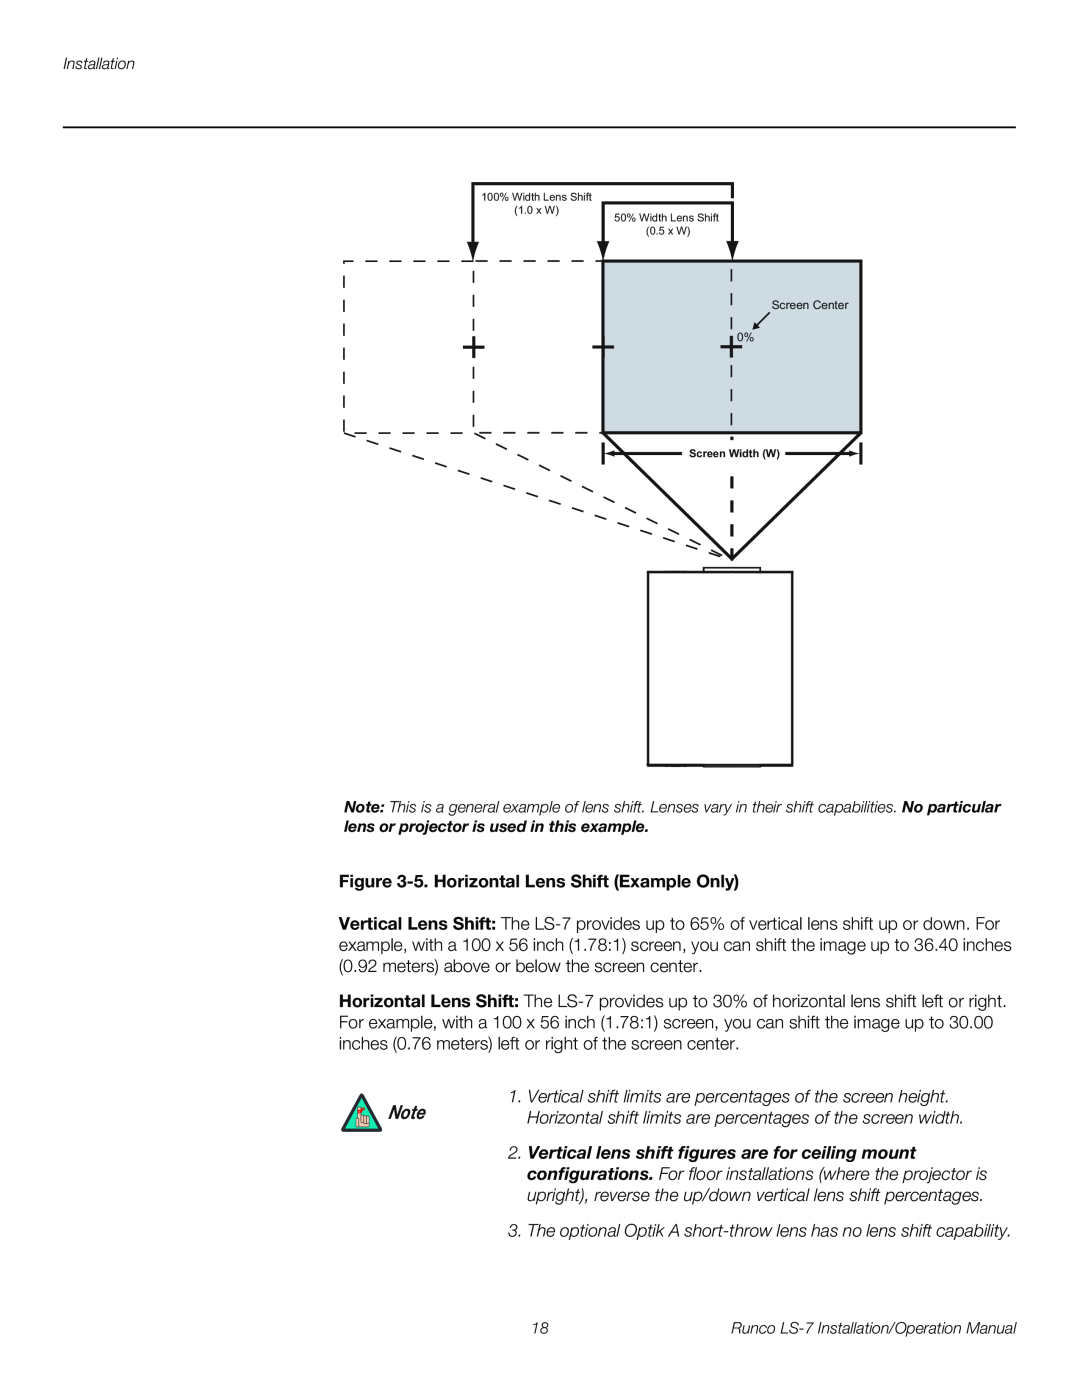 Runco LS-7 operation manual 5.Horizontal Lens Shift Example Only, Installation 